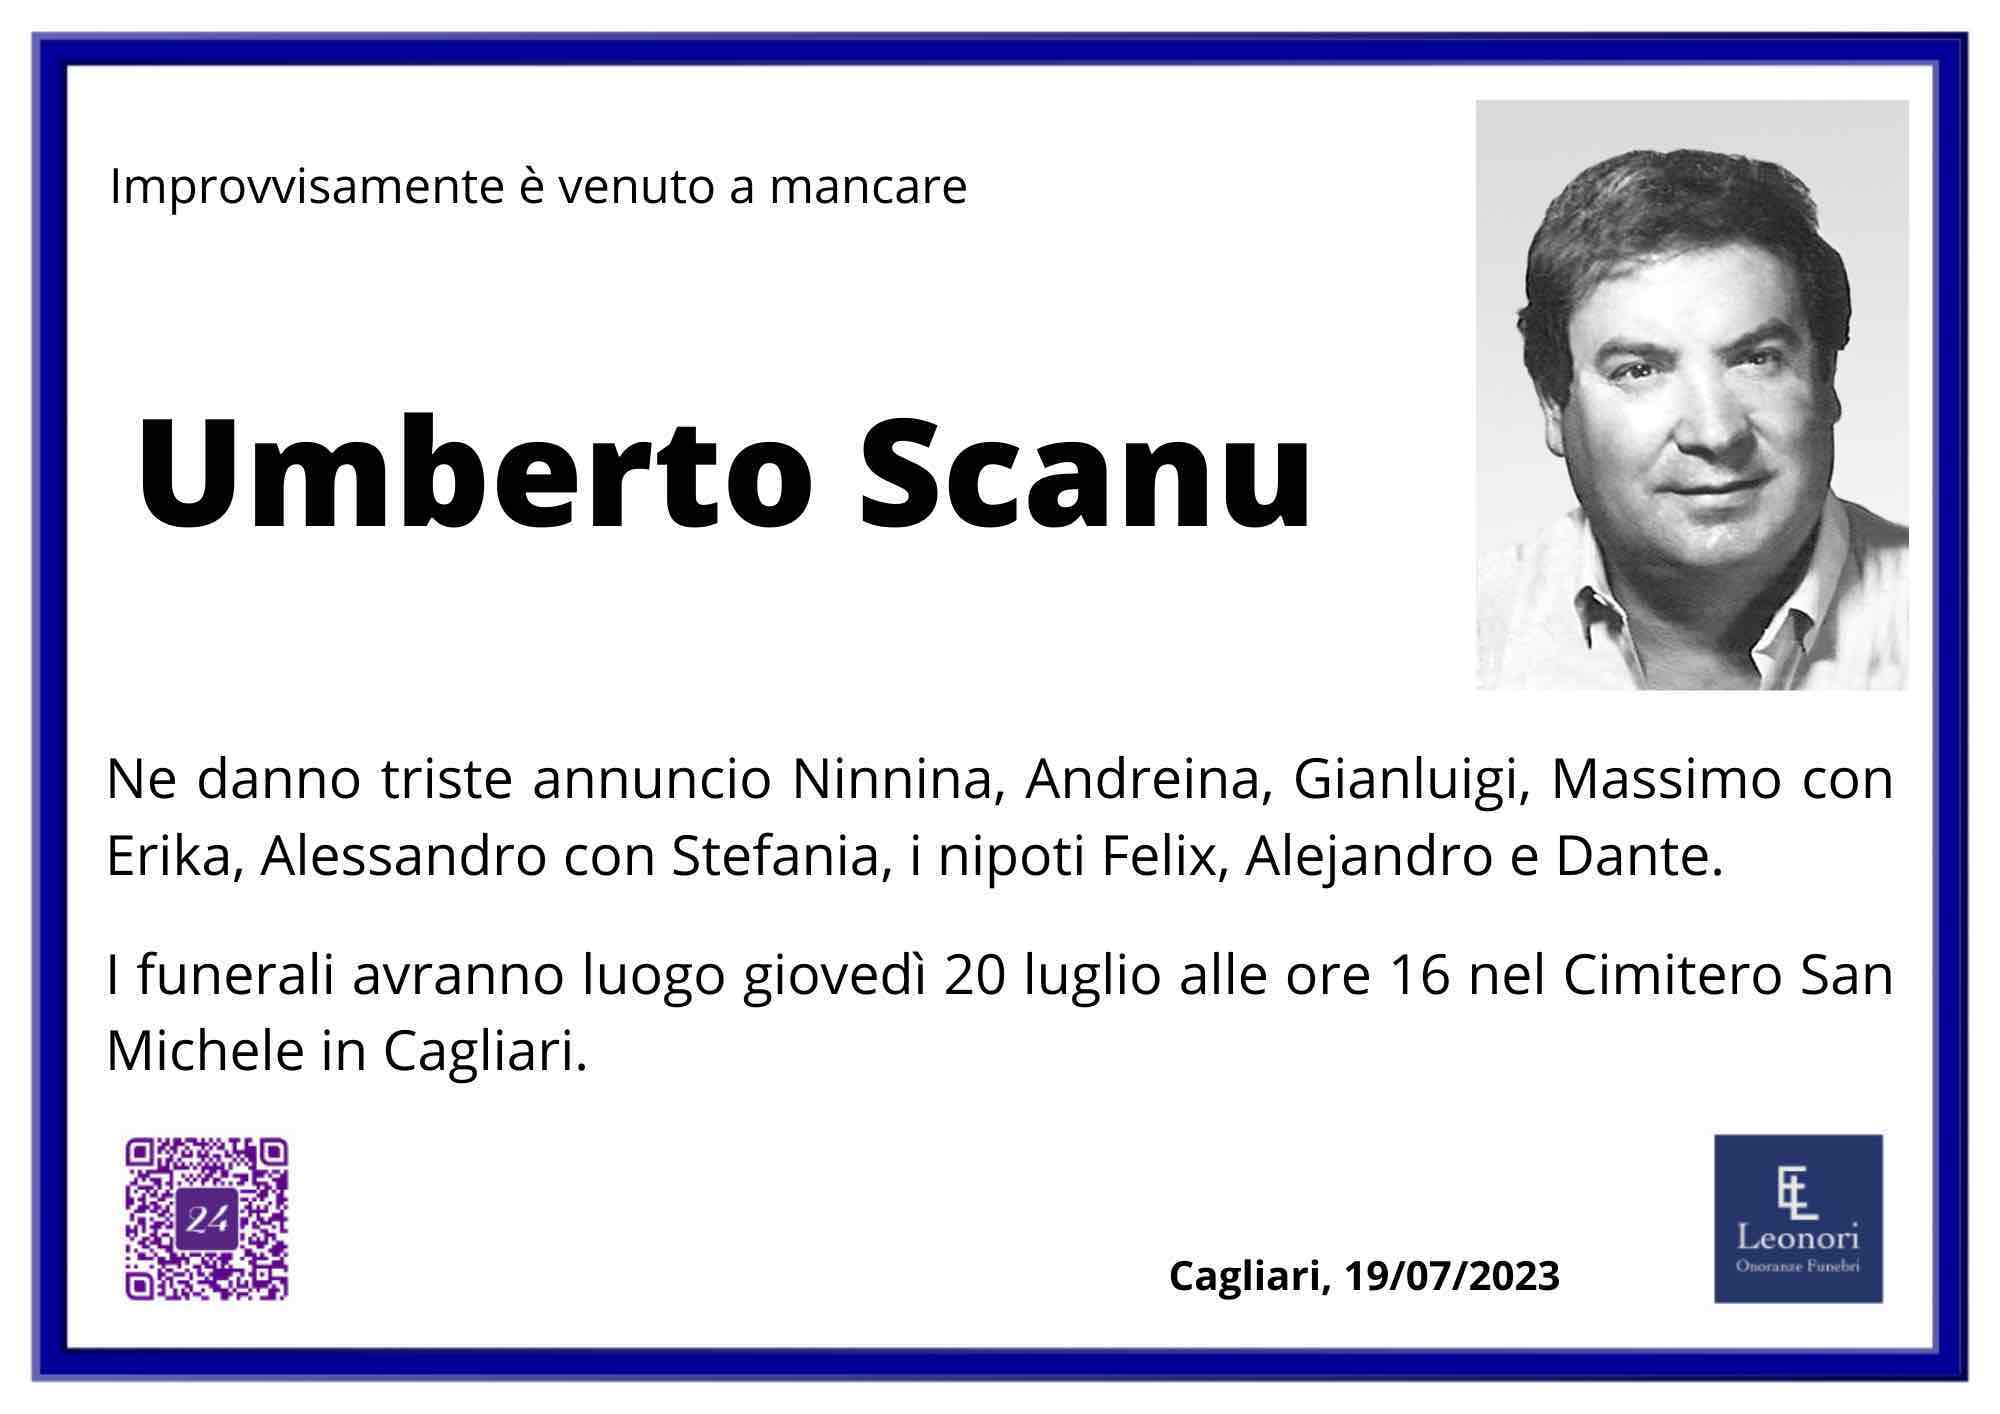 Umberto Scanu